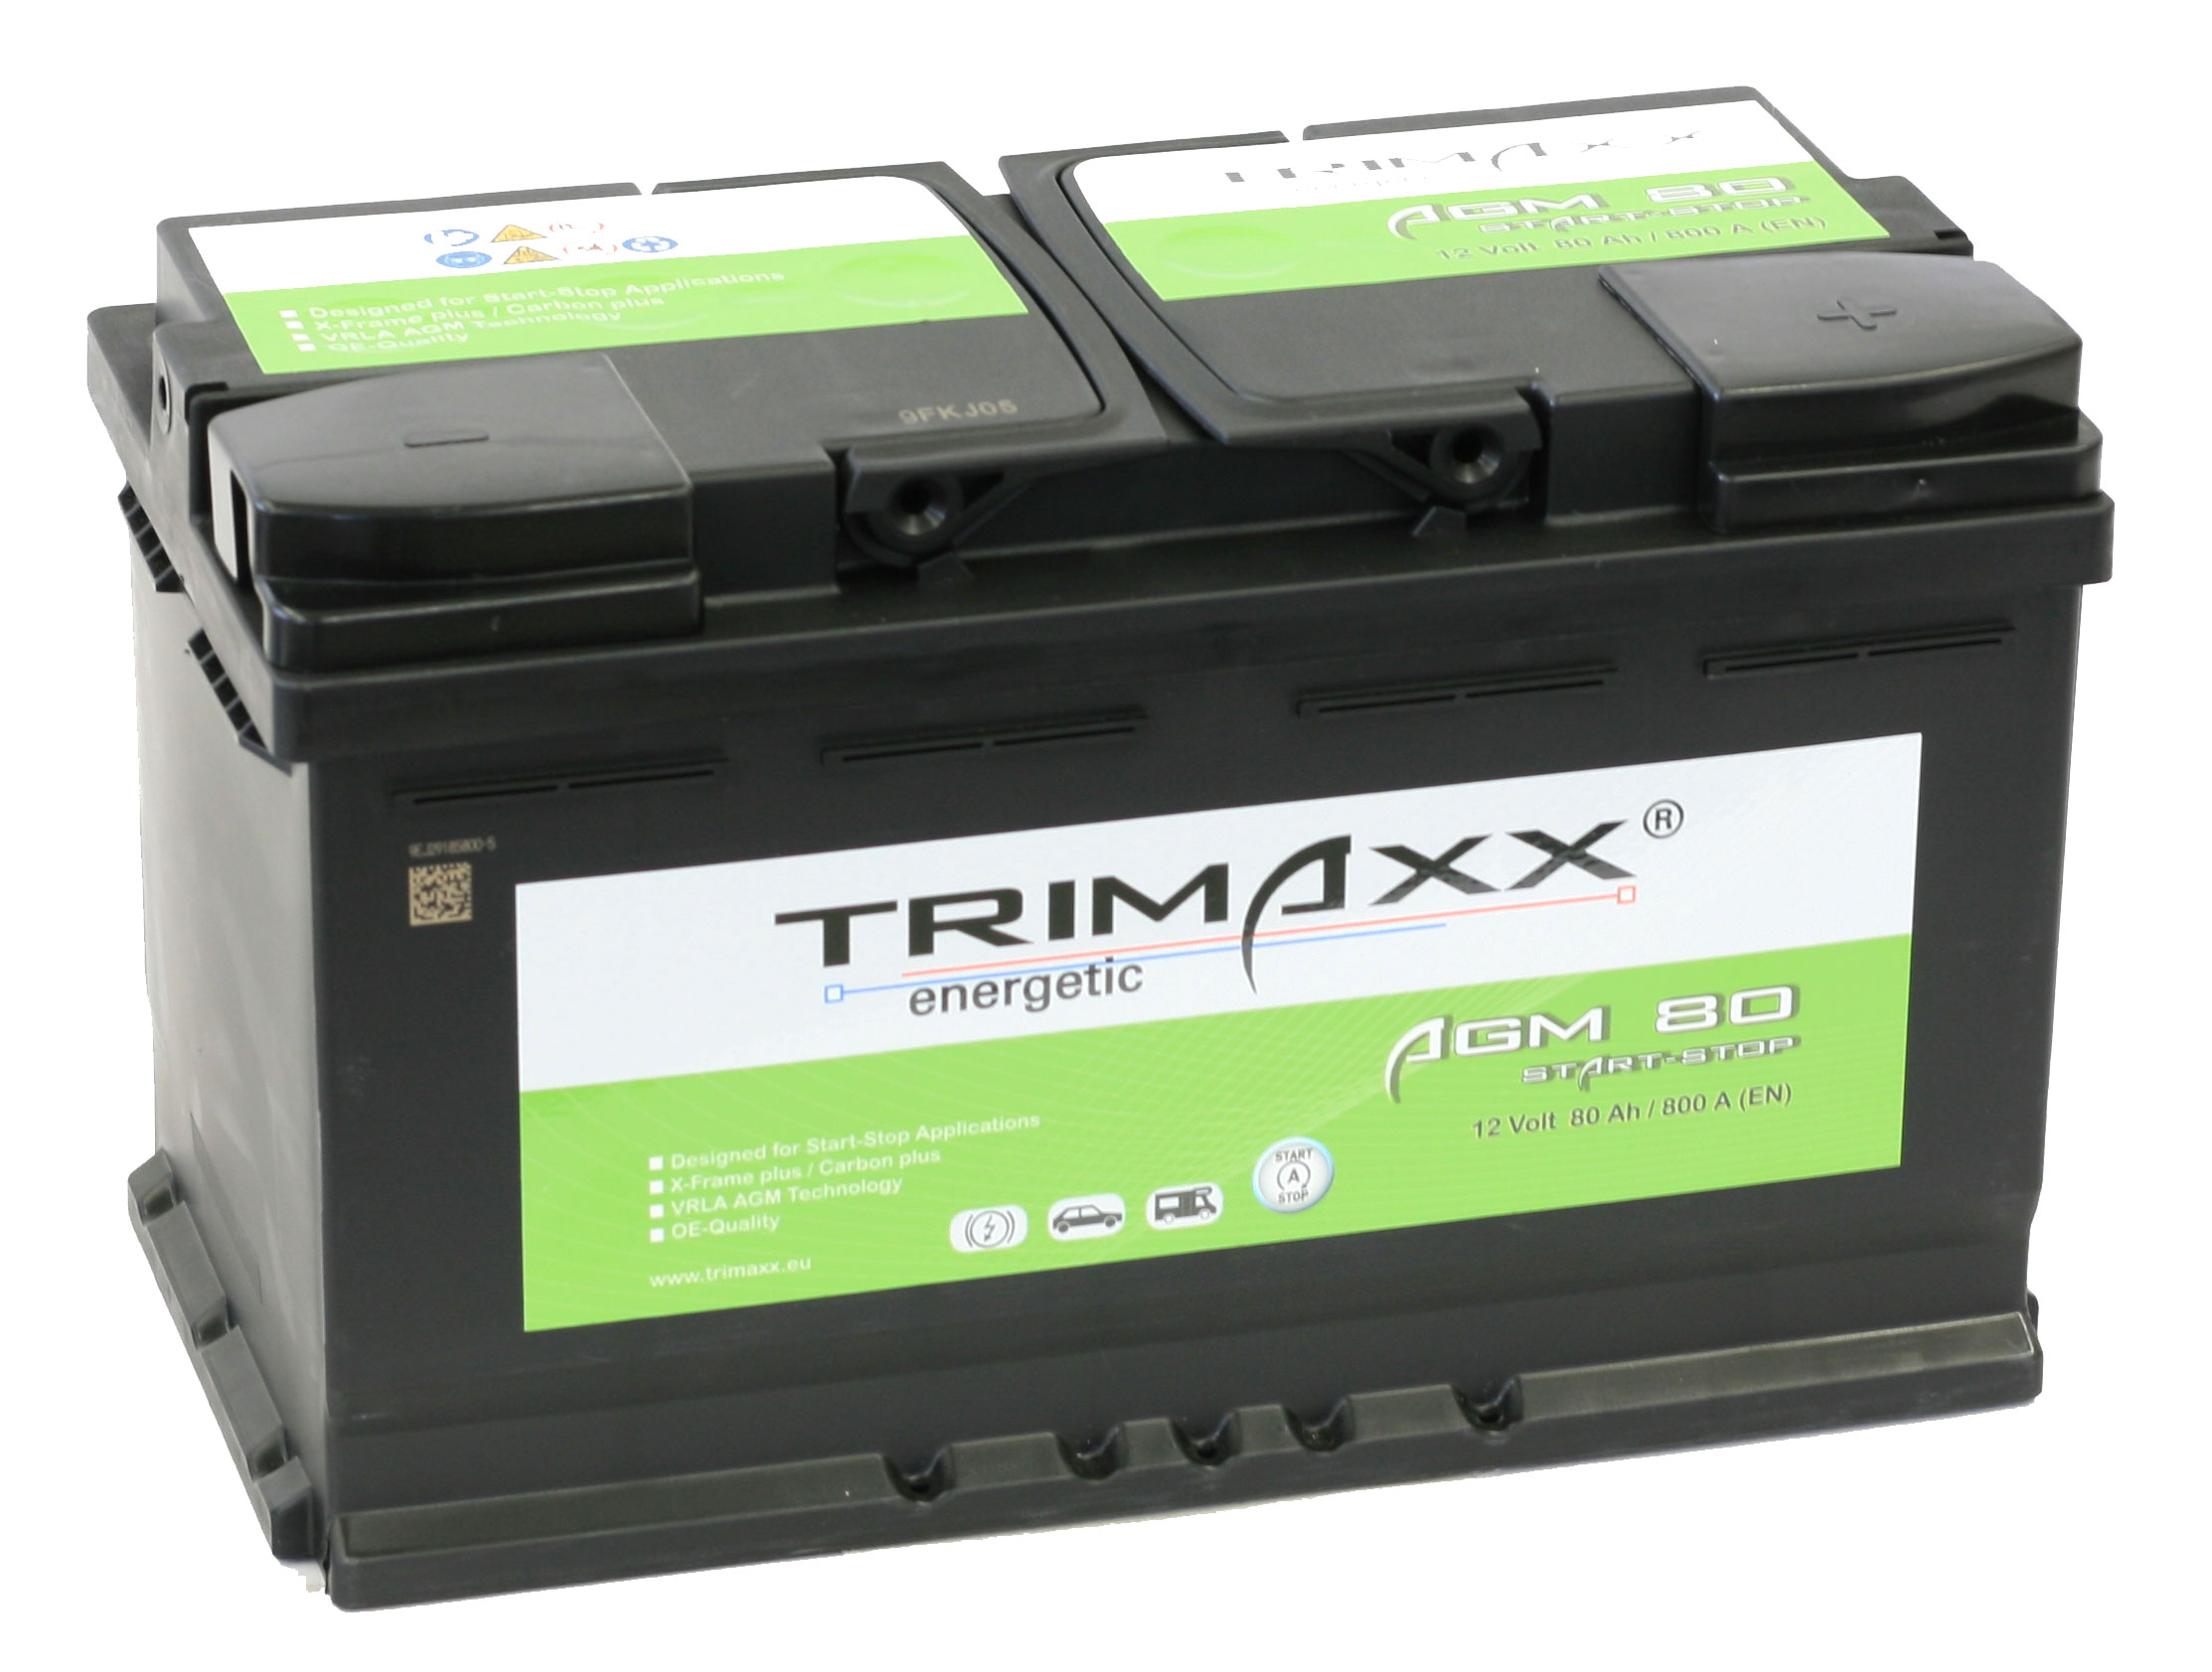 Trimaxx Professional Star-Stop AGM, 80Ah, 800A